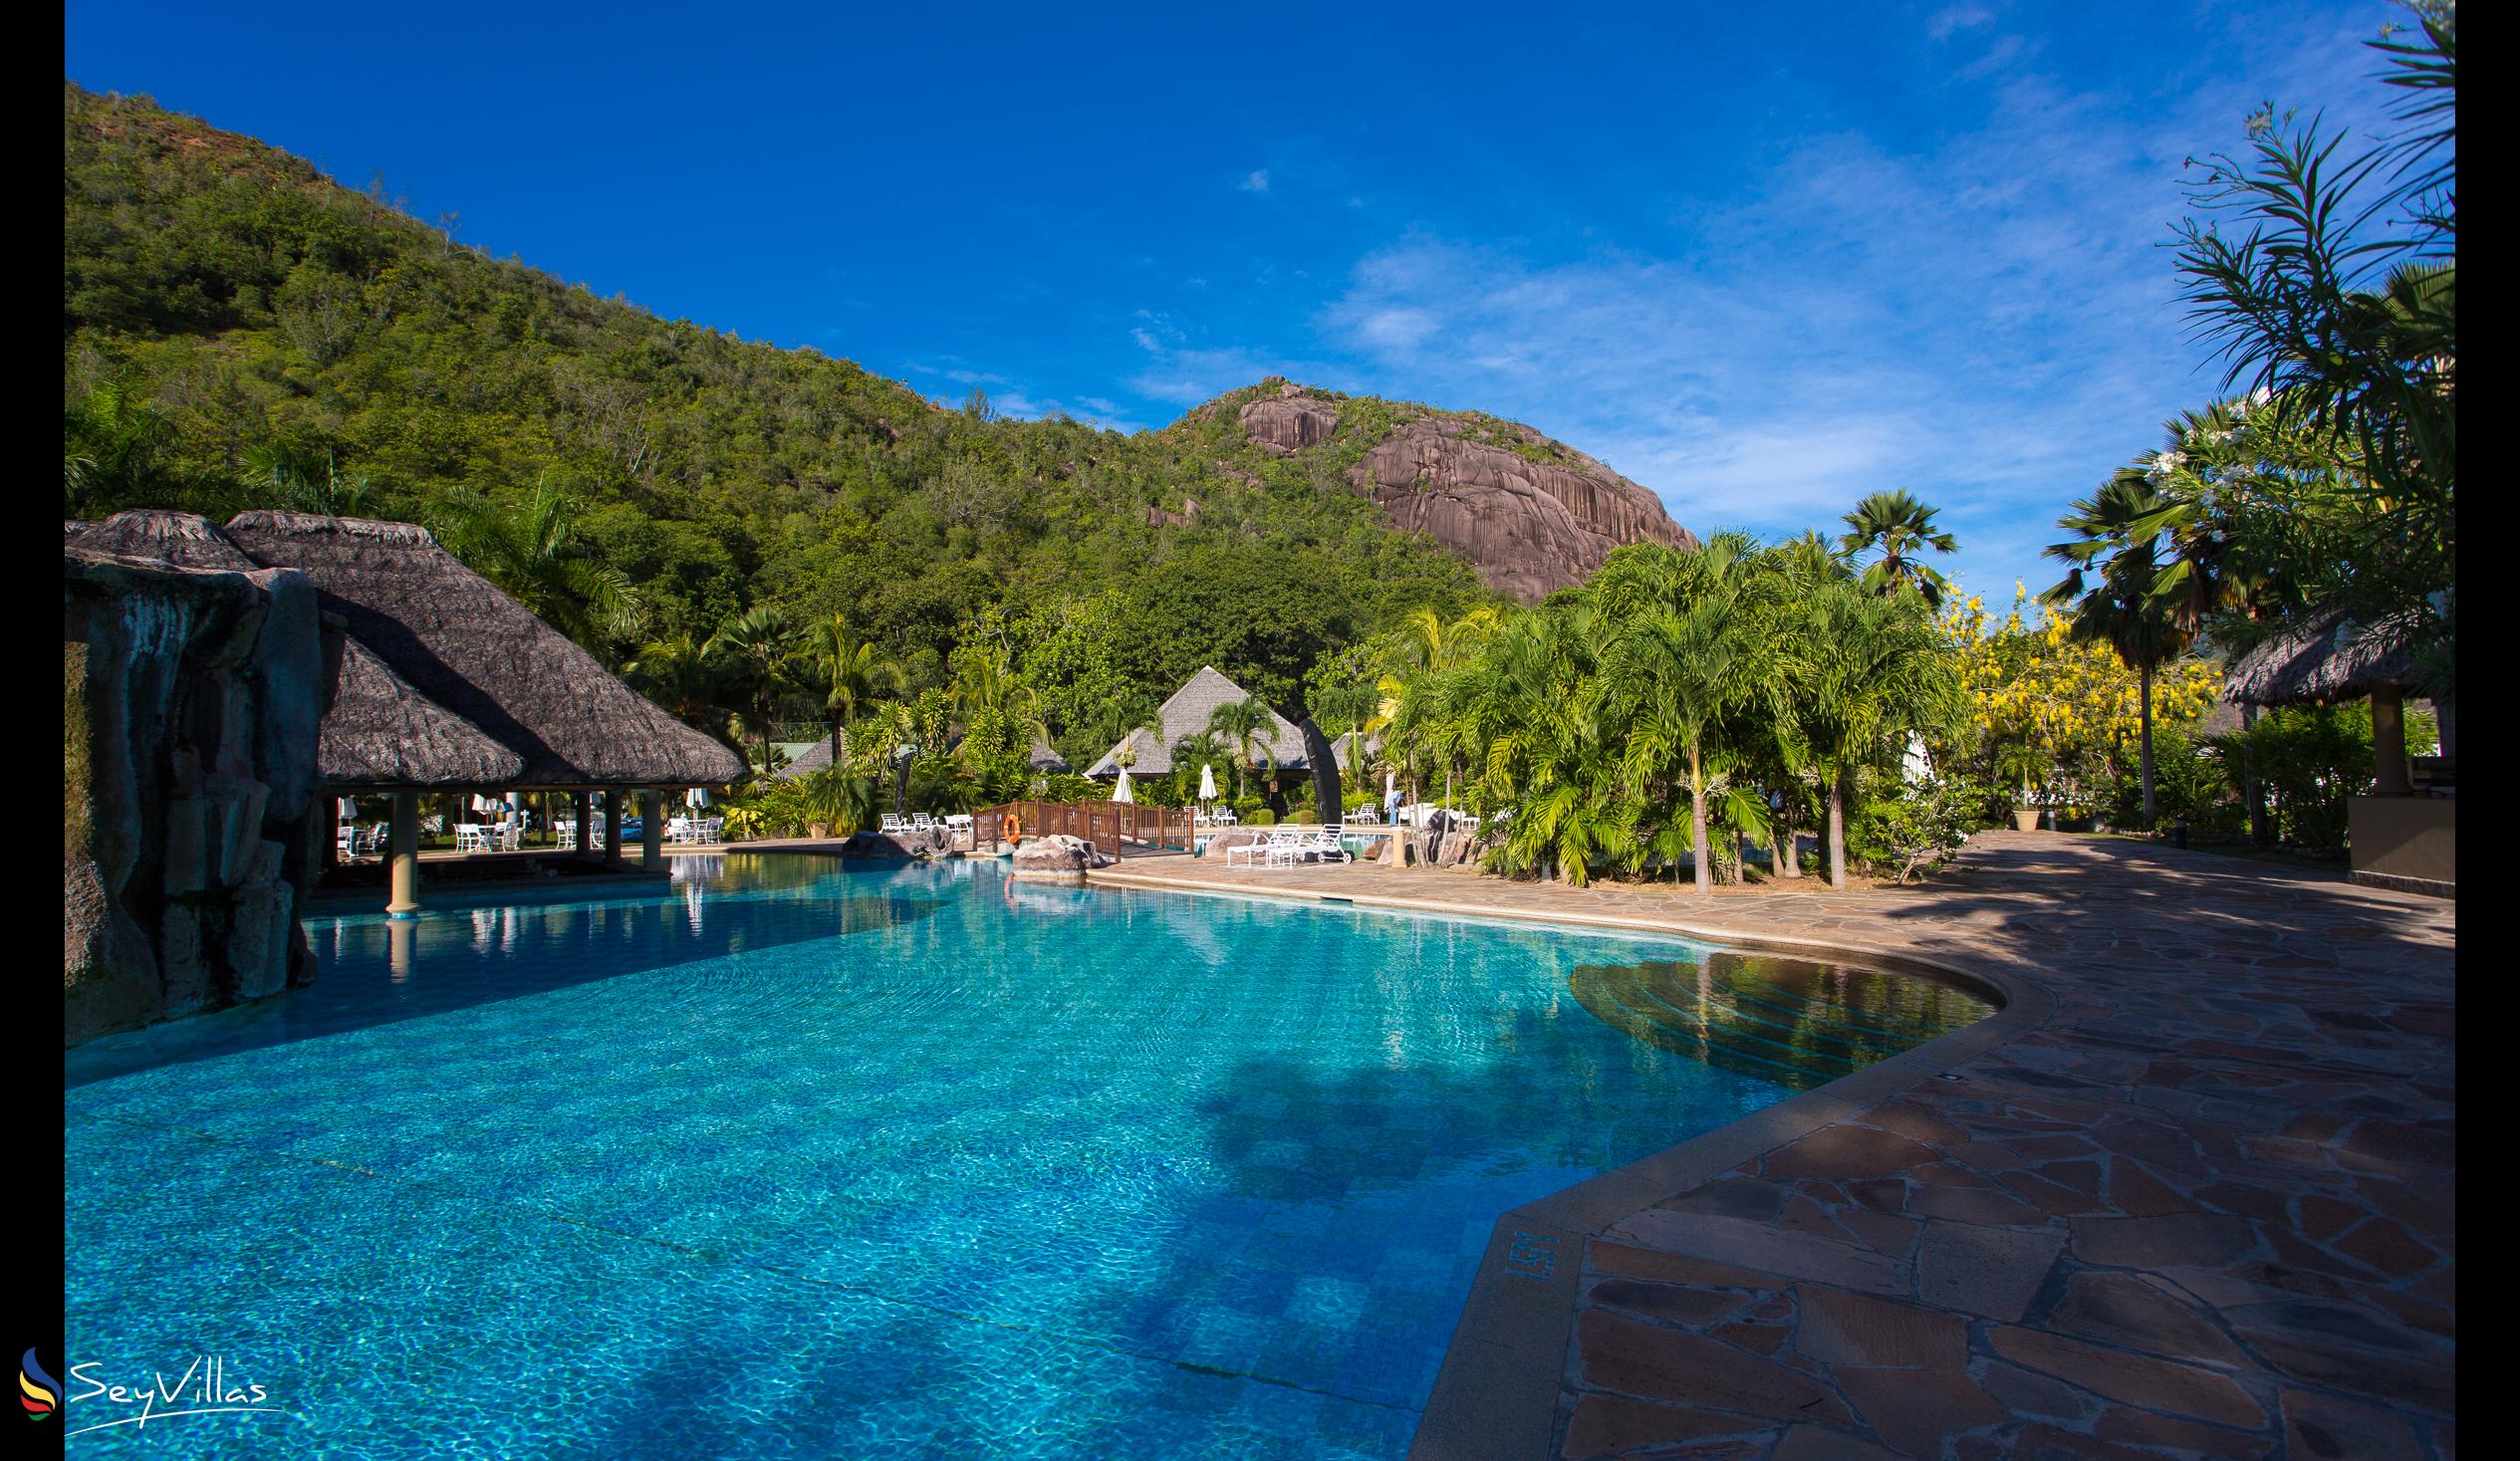 Photo 32: Le Domaine de La Reserve - Outdoor area - Praslin (Seychelles)